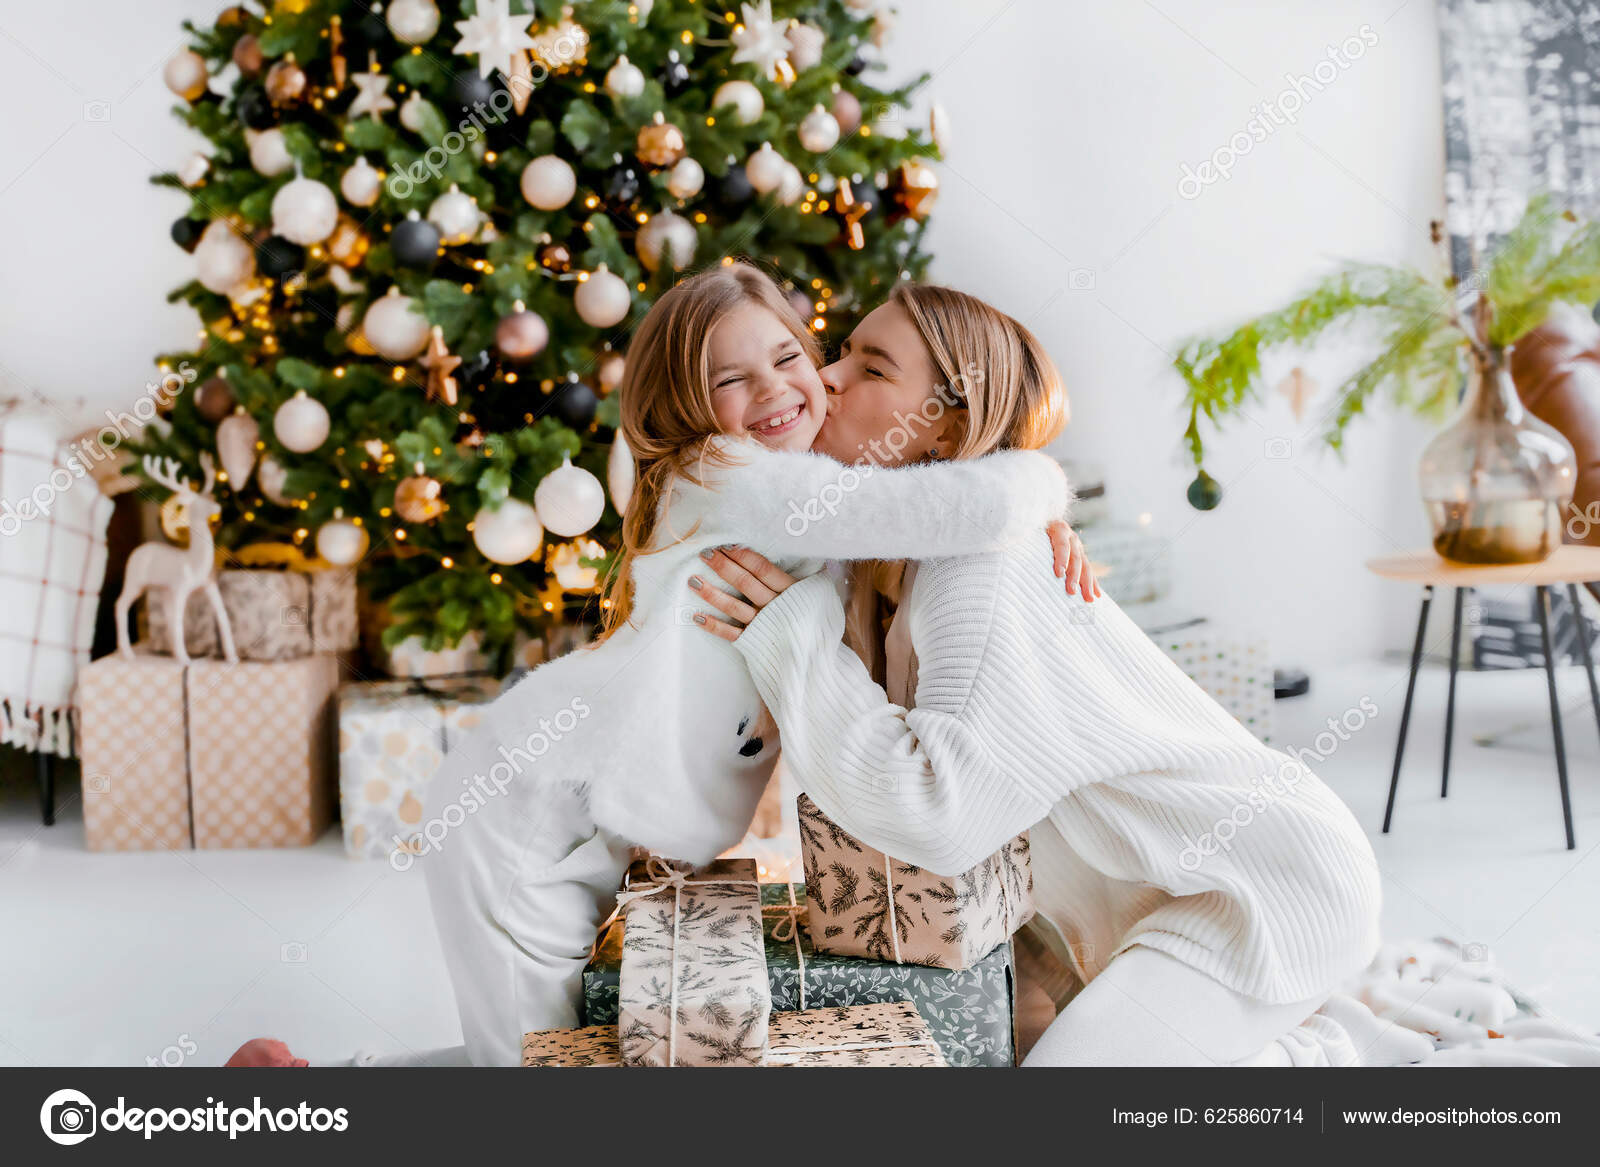 https://st5.depositphotos.com/16172366/62586/i/1600/depositphotos_625860714-stock-photo-cute-mother-daughter-hugging-christmas.jpg